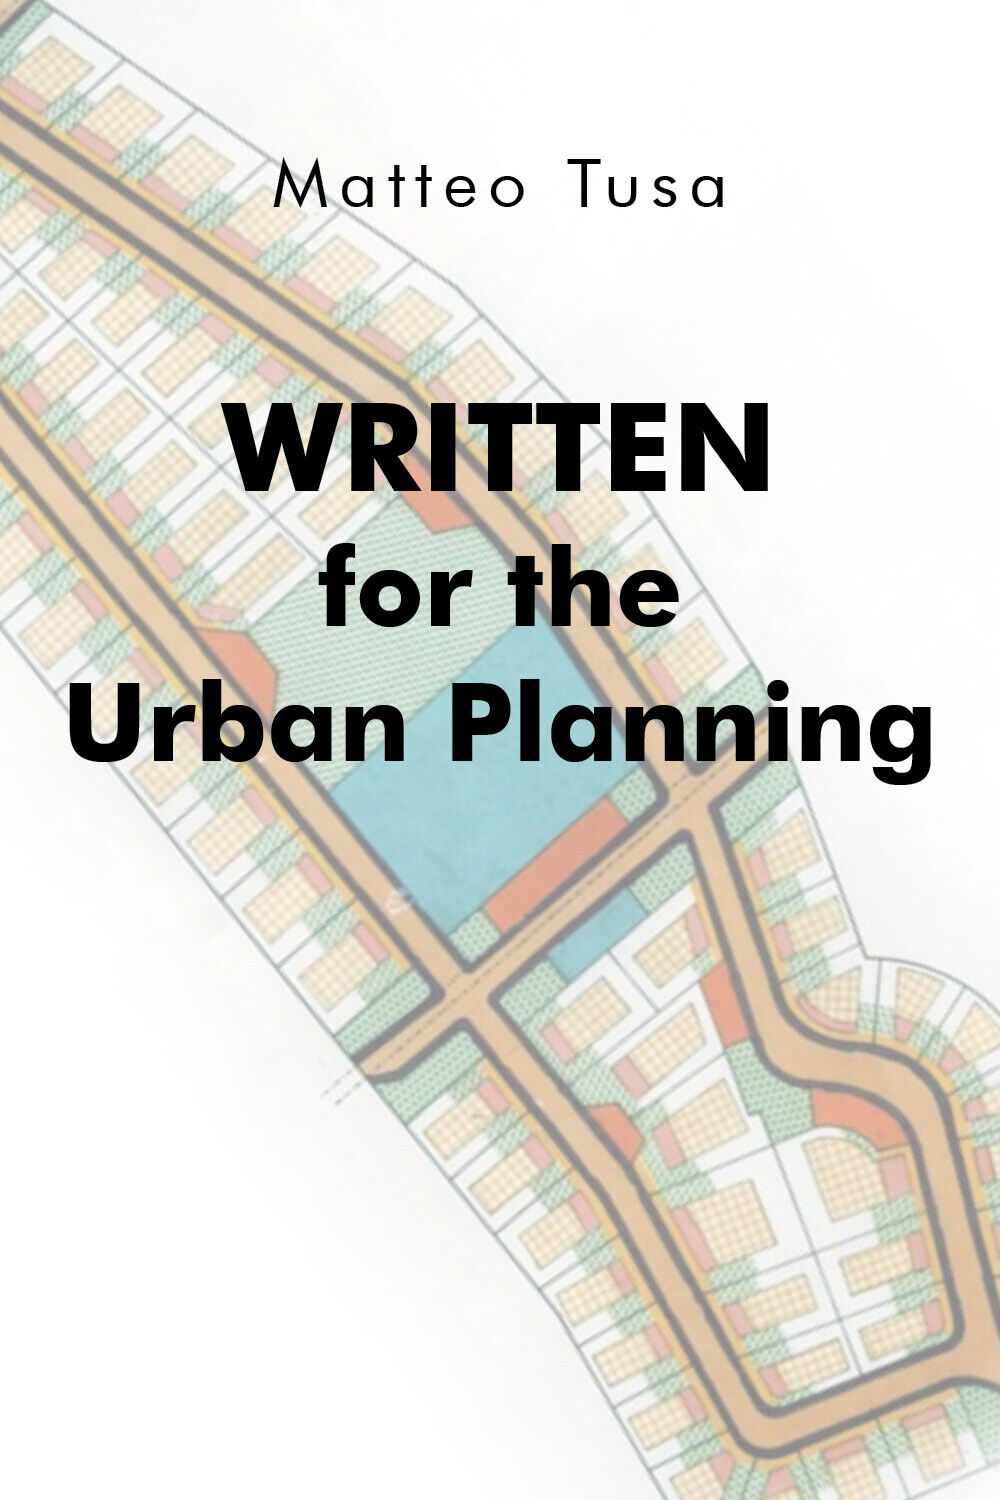 Written for the Urban Planning - Matteo Tusa,  2020,  Youcanprint